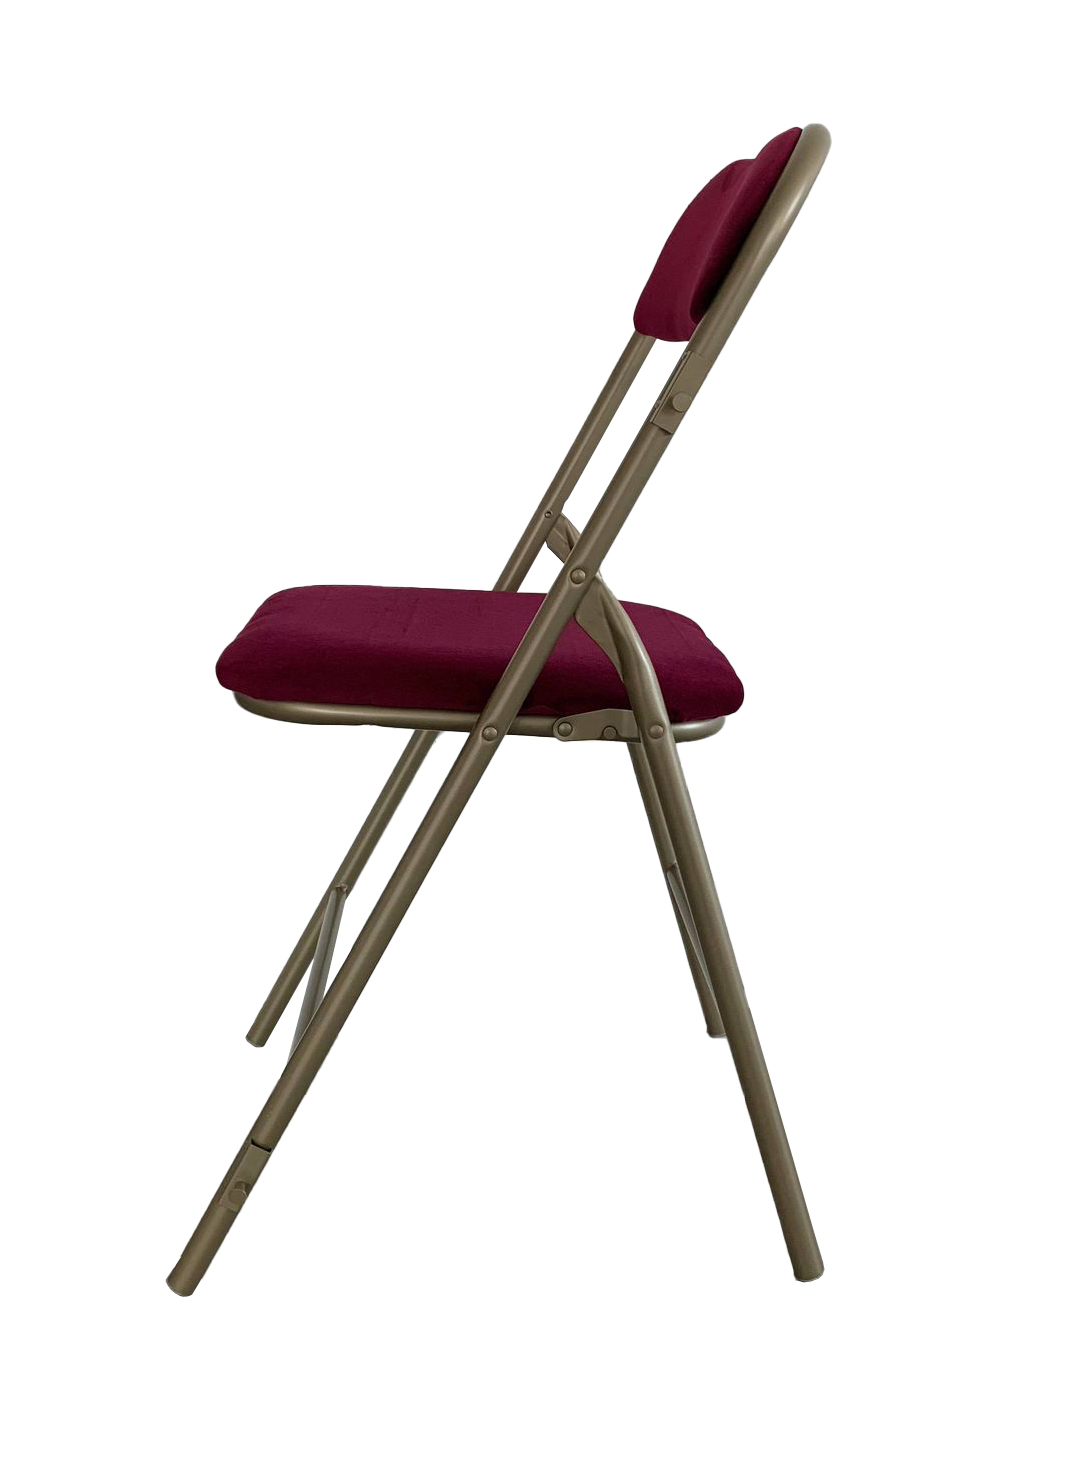 Folding chair Prestige Burgundy & gold M1